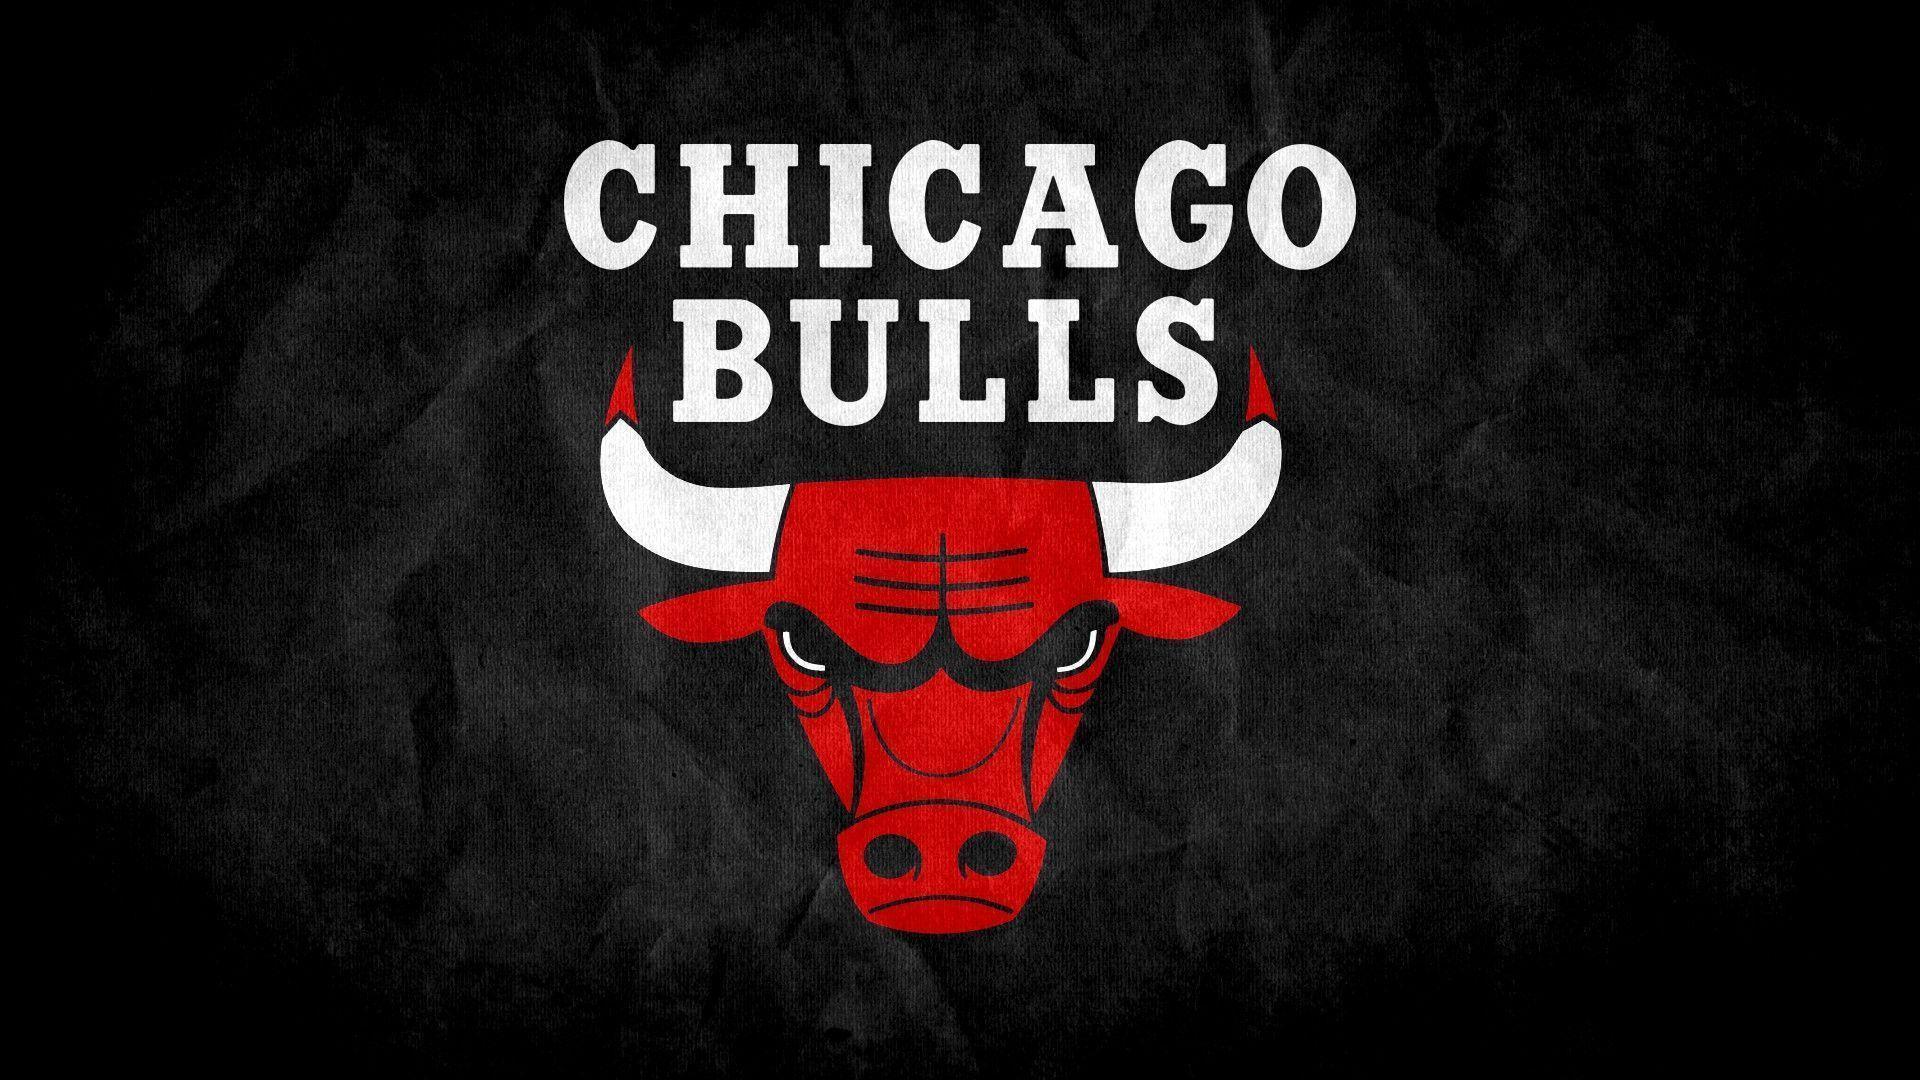 Chicago Bulls Wallpaper 3 Background. Wallruru